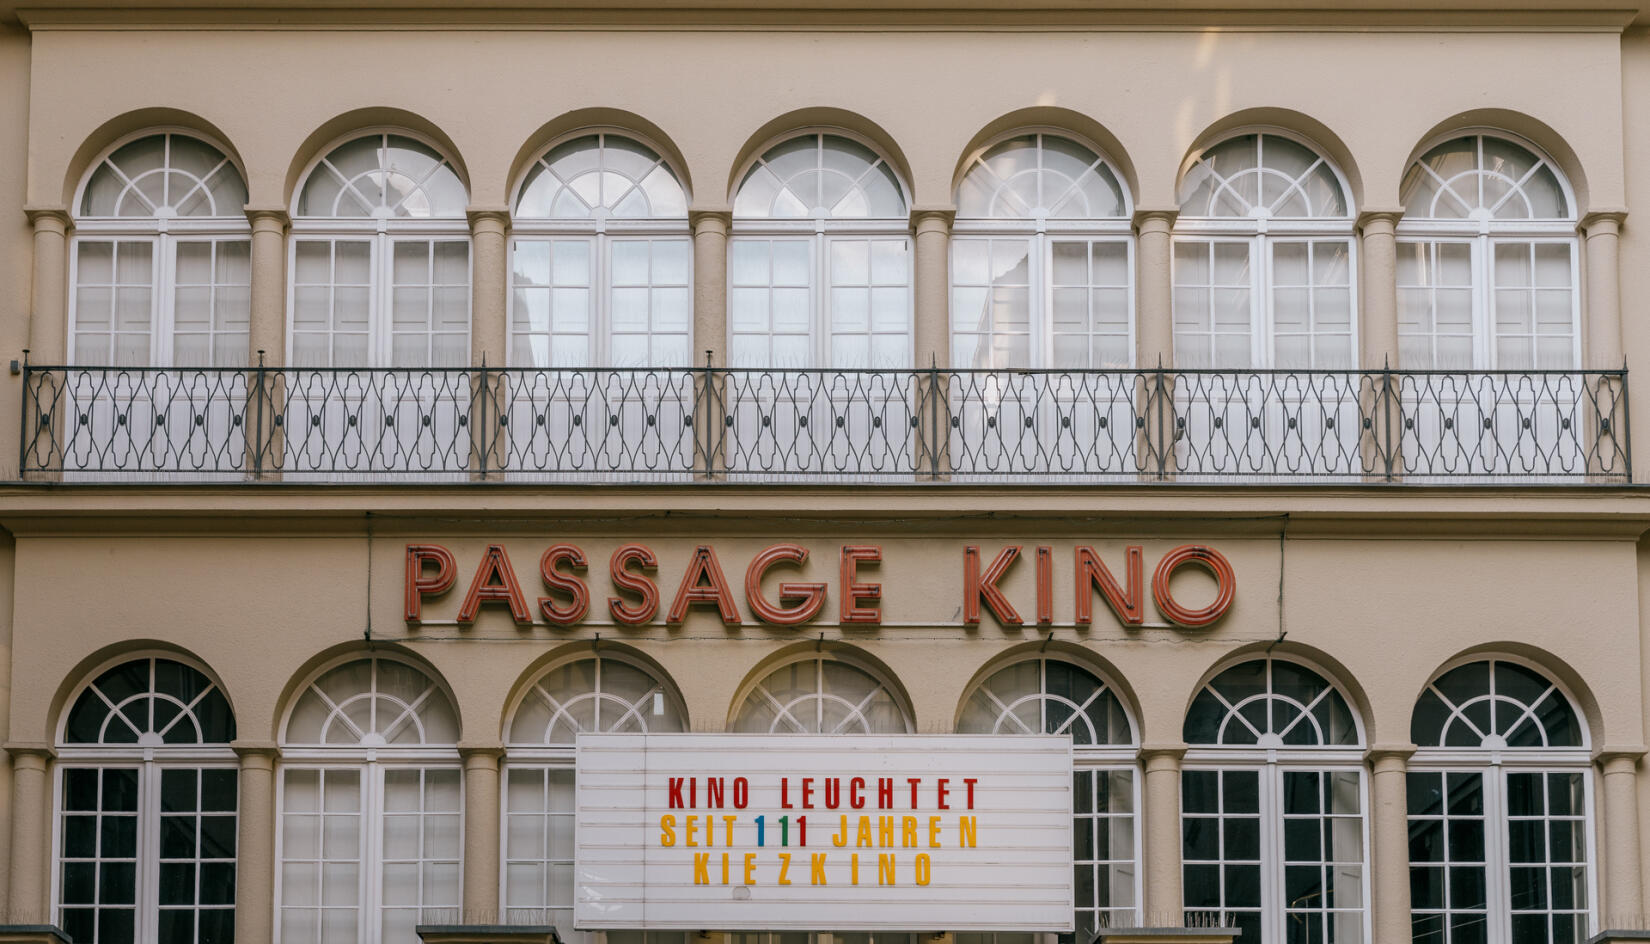 Passage Kino